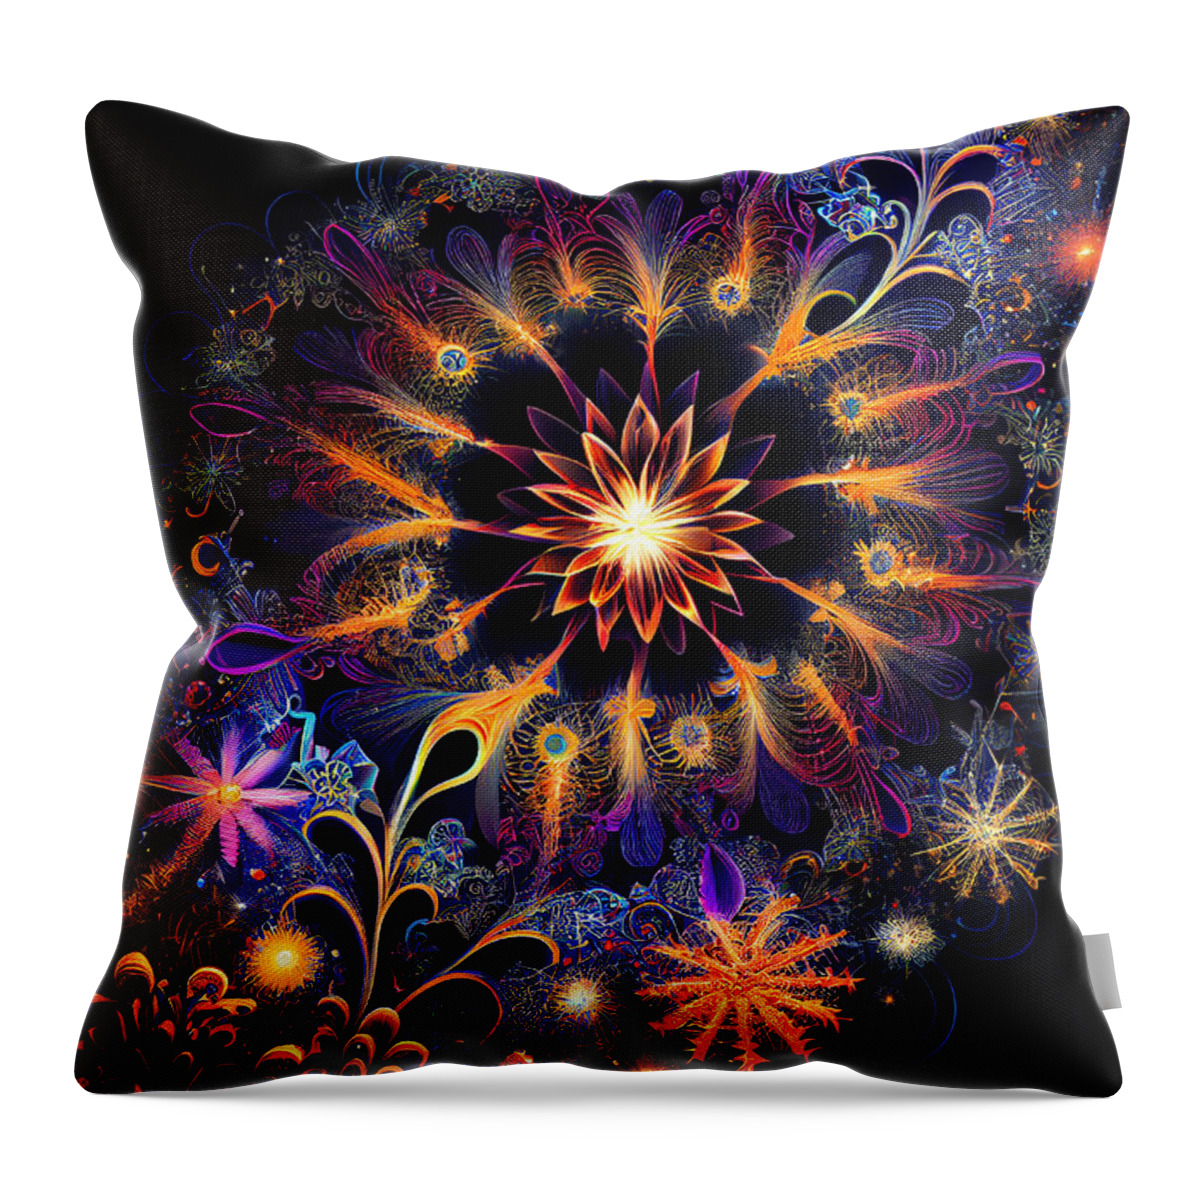 Series Throw Pillow featuring the digital art Fireworks magic #4 by Sabantha